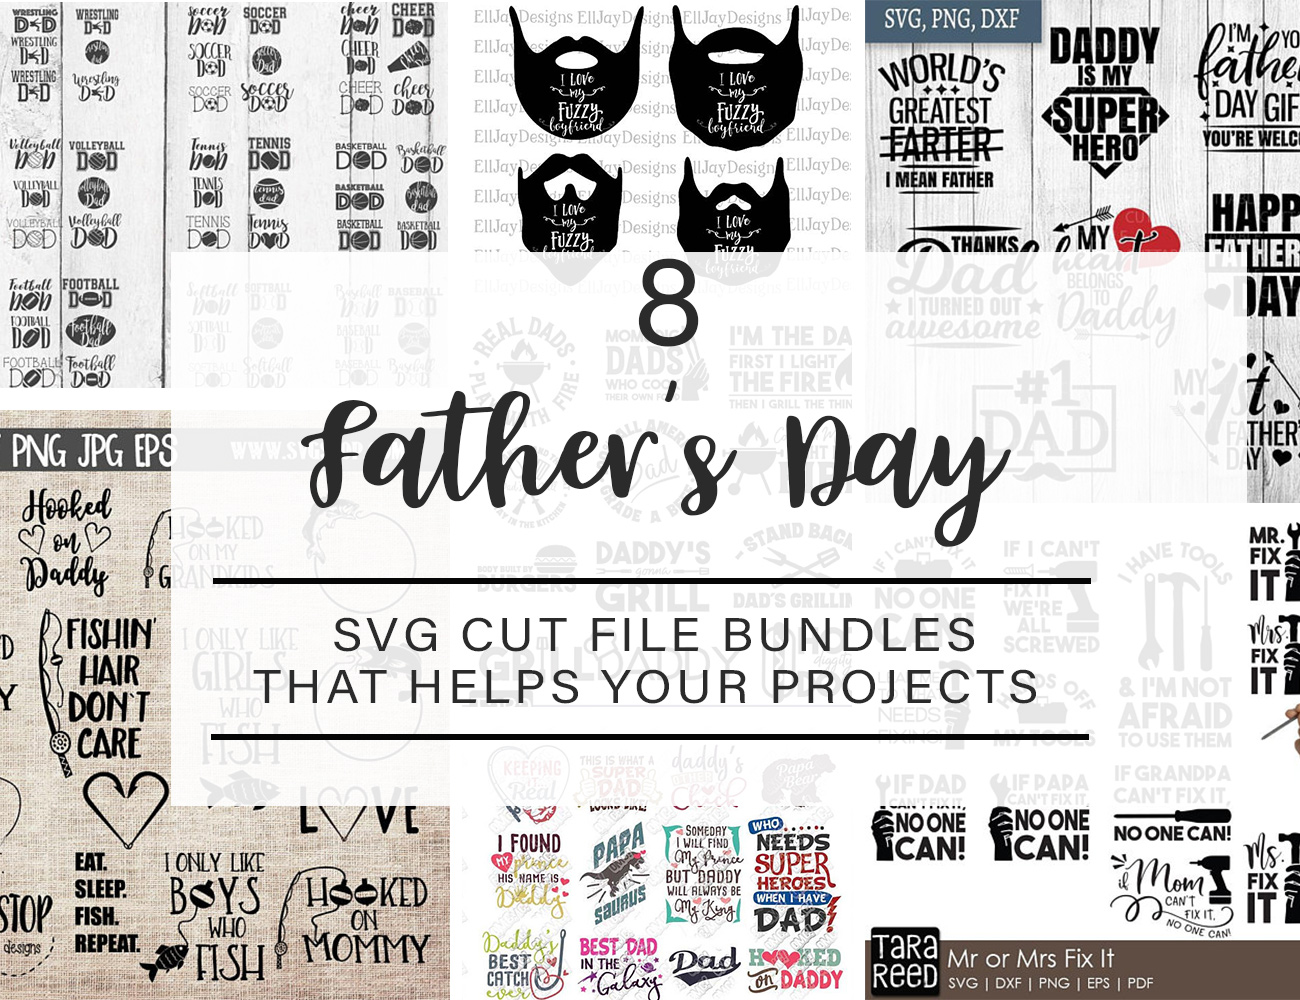 father's day SVG cut file bundles